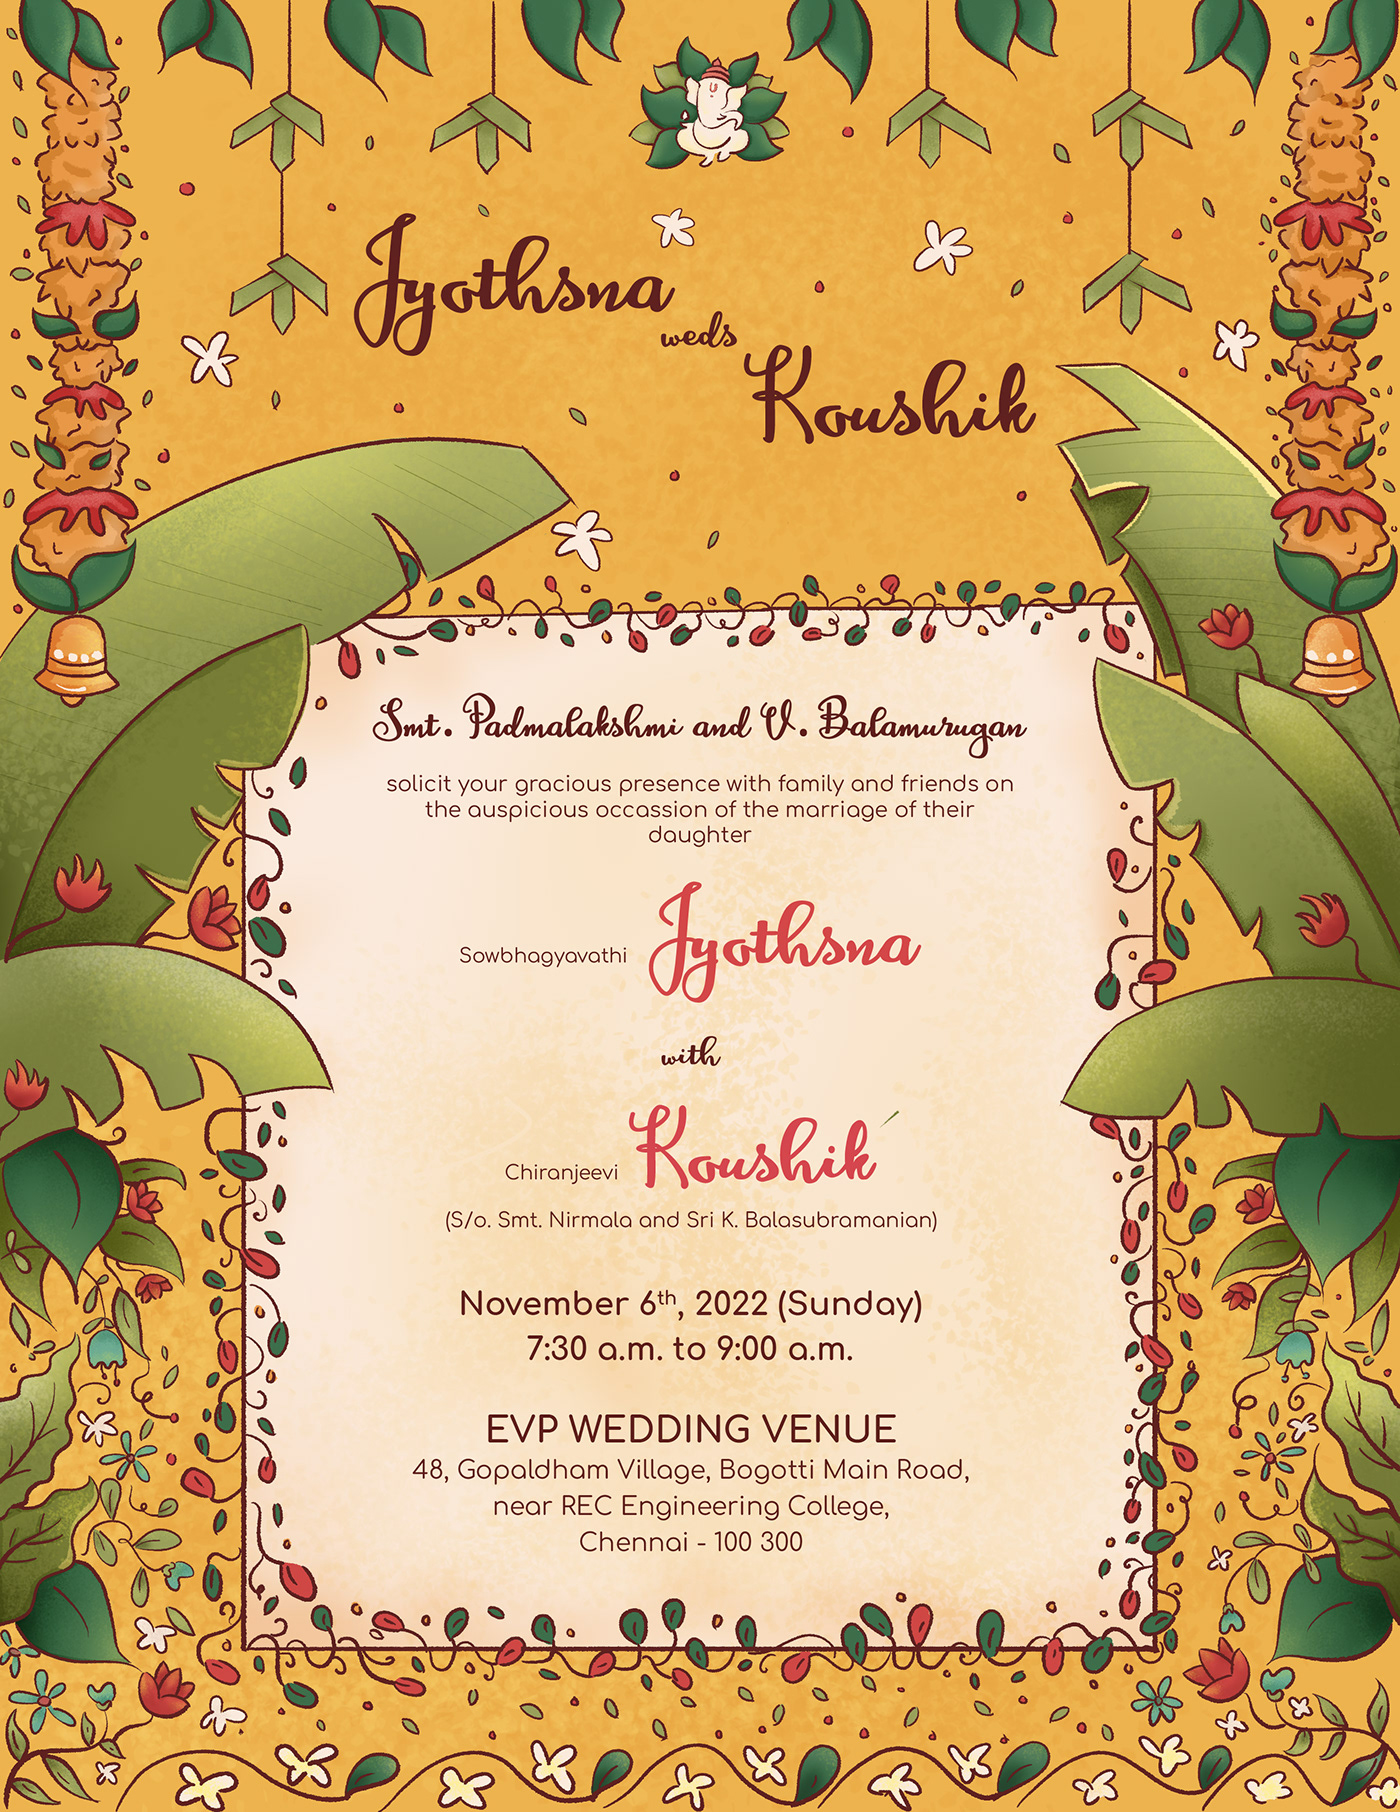 Tamil iyer bride and groom indian wedding invitation